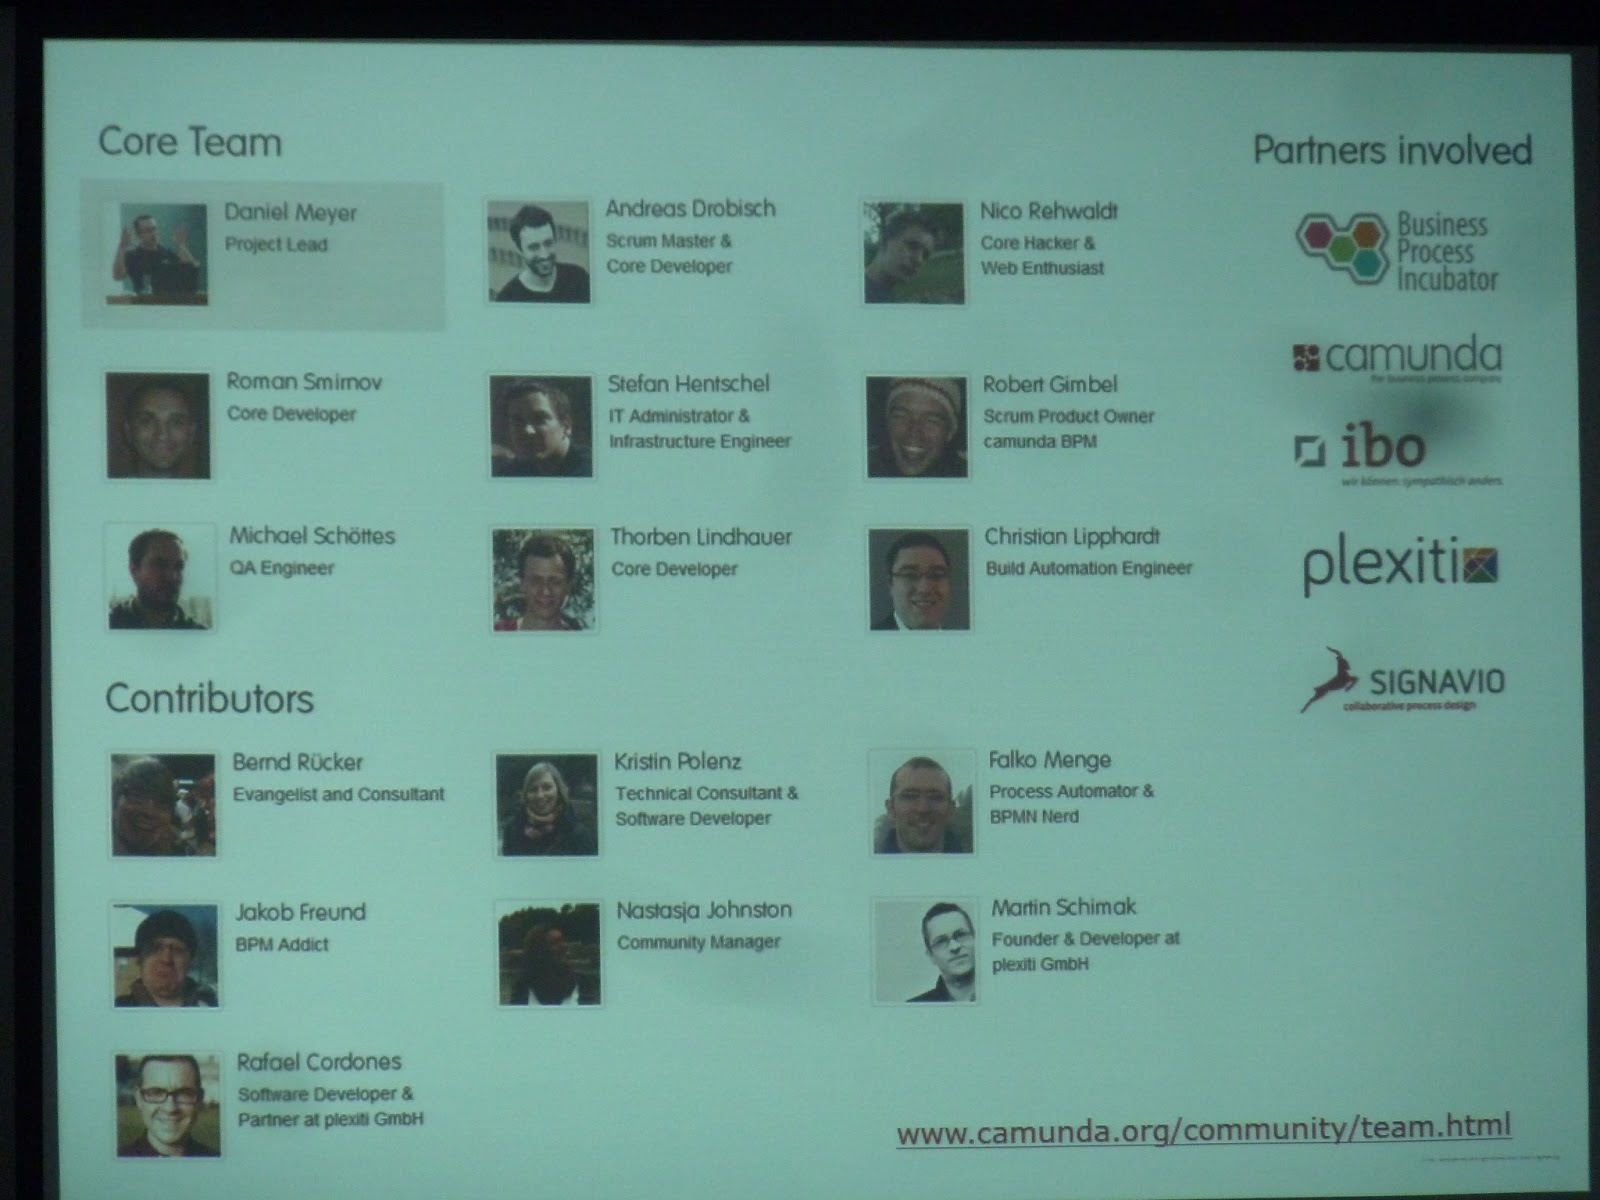 presentation slide showing the team members